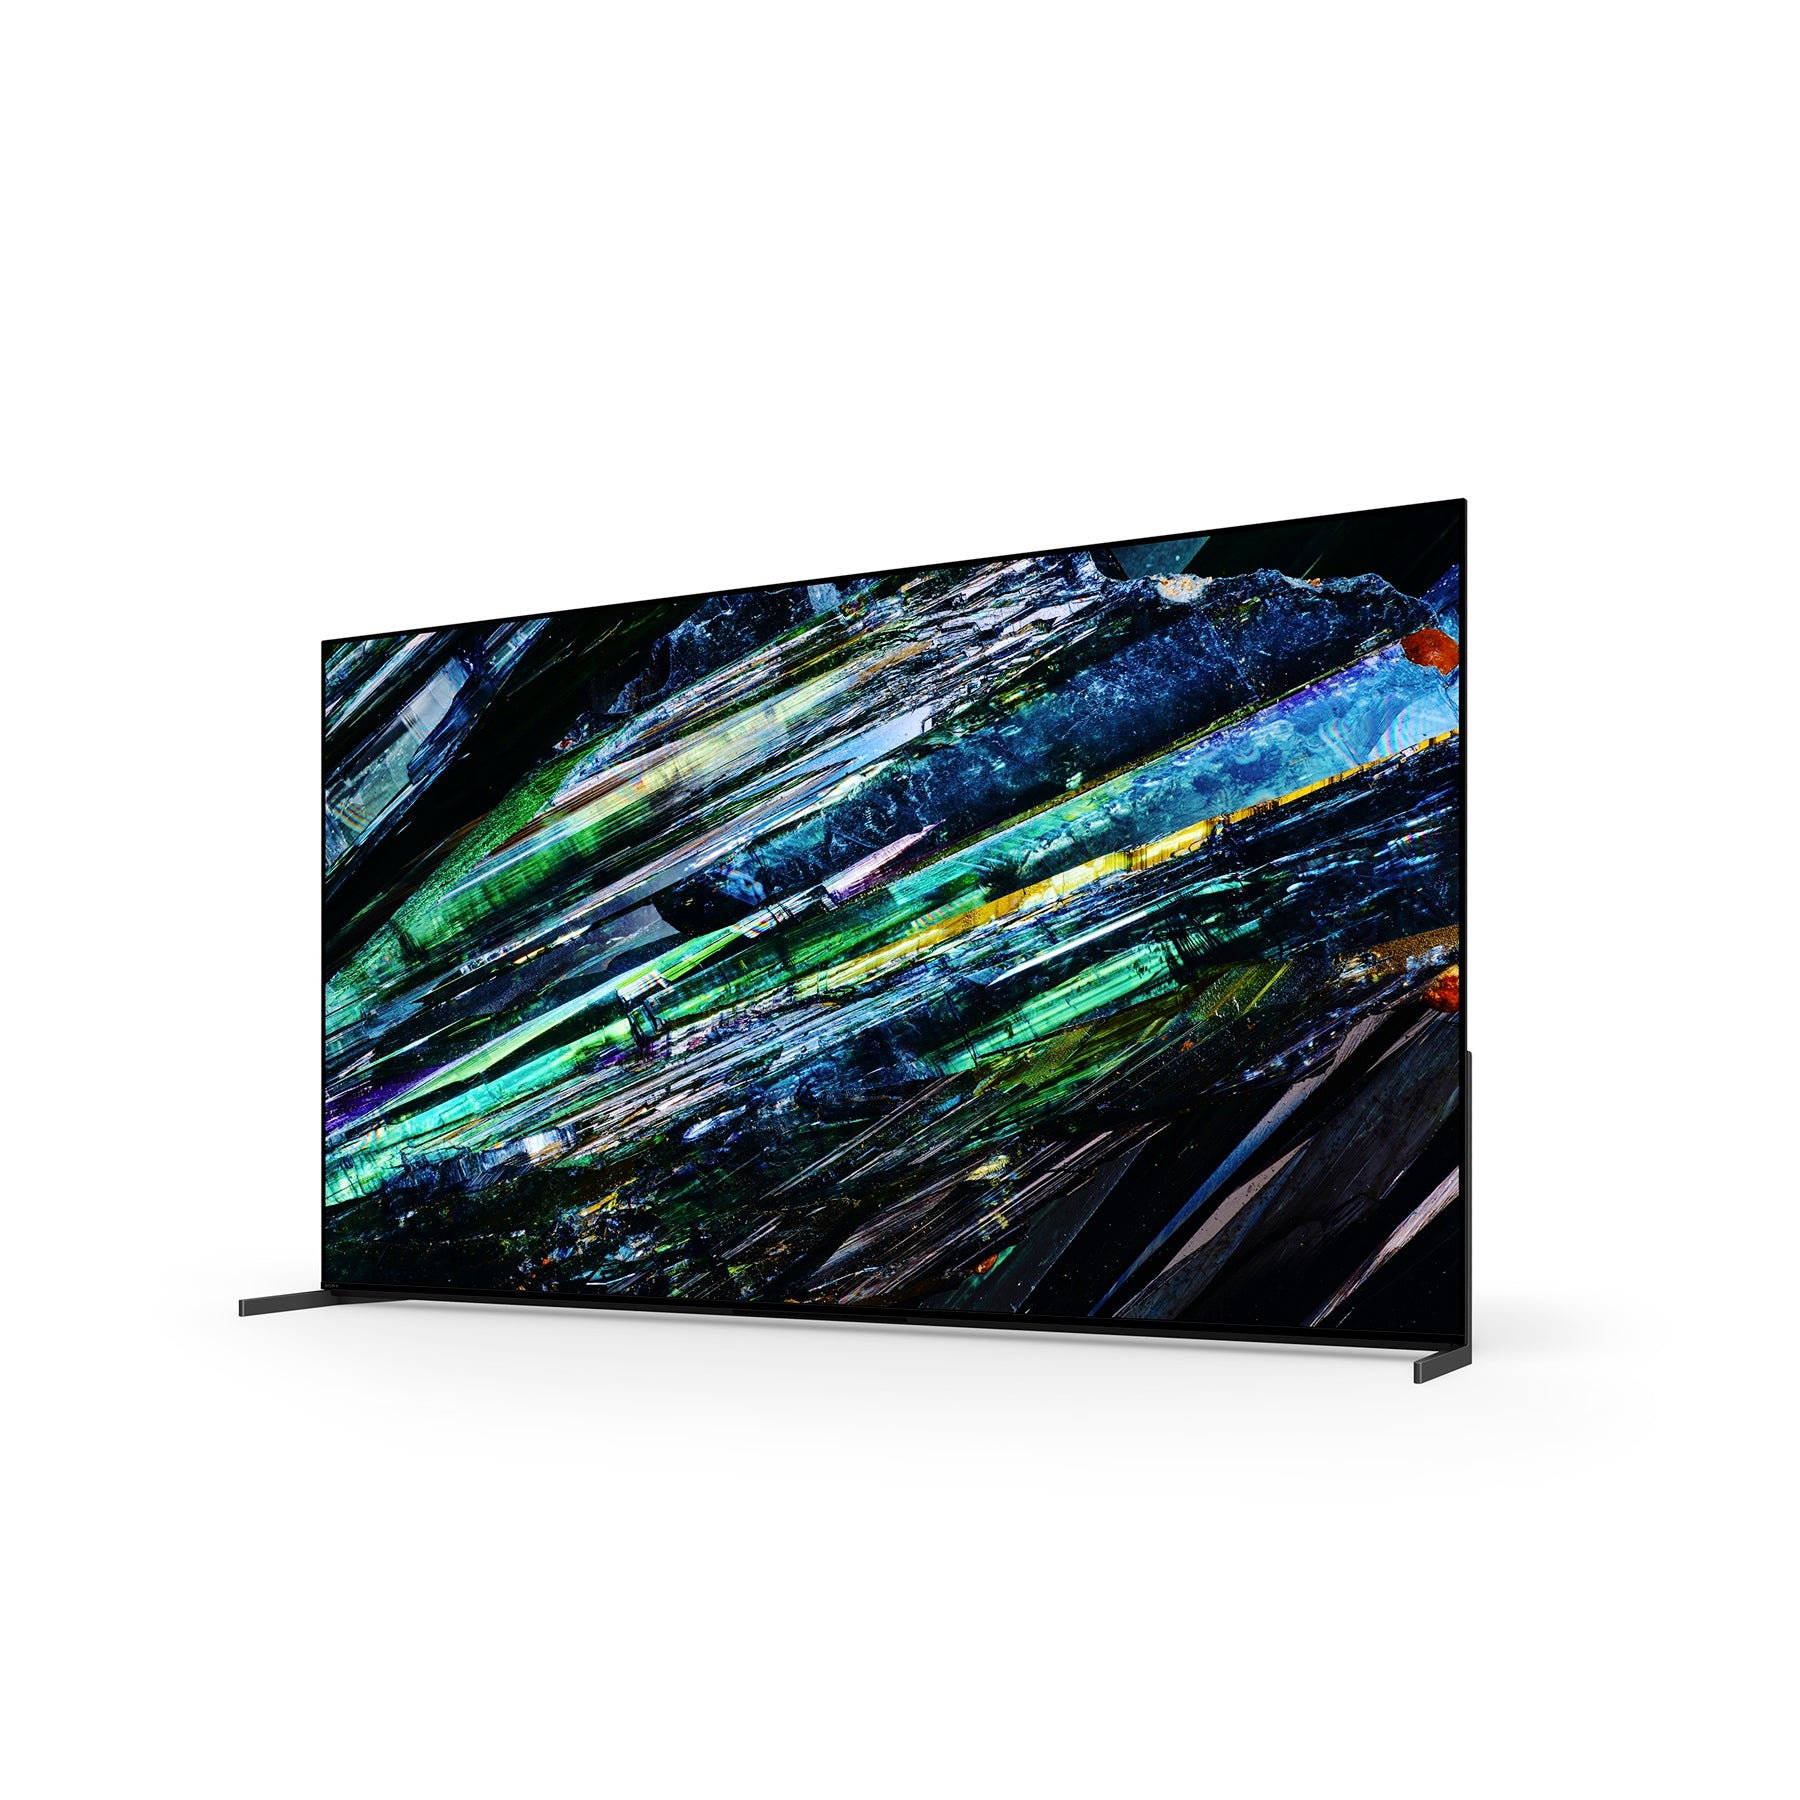 טלוויזיה SONY 55 אינץ A95L | BRAVIA XR | OLED | 4K Ultra HD | HDR | טלוויזיה חכמה